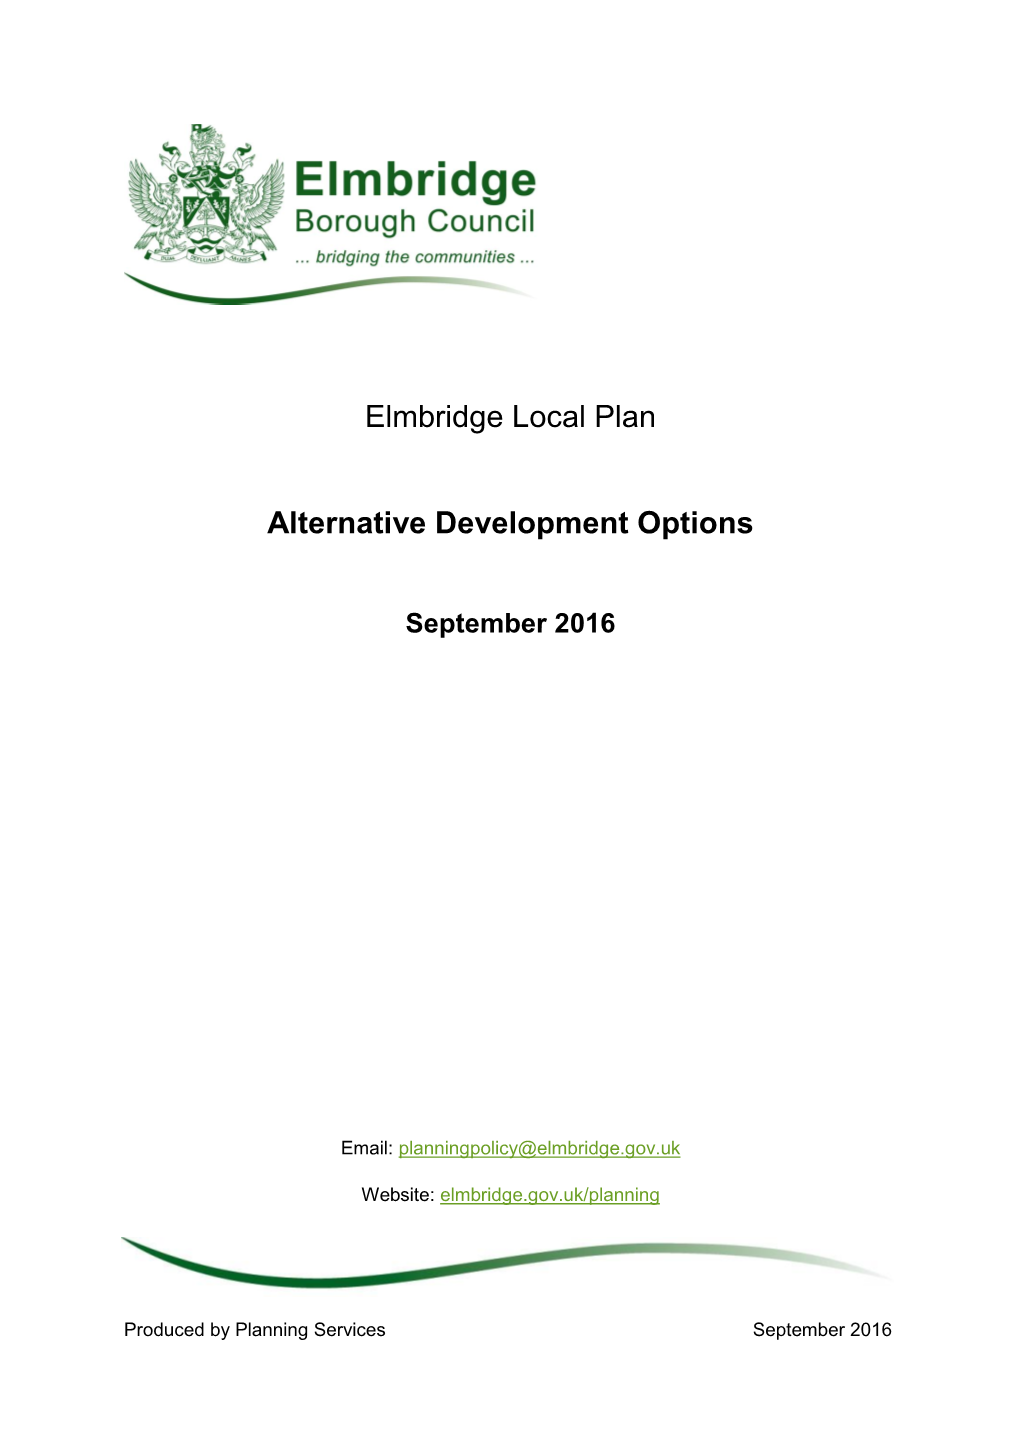 Elmbridge Local Plan Alternative Development Options